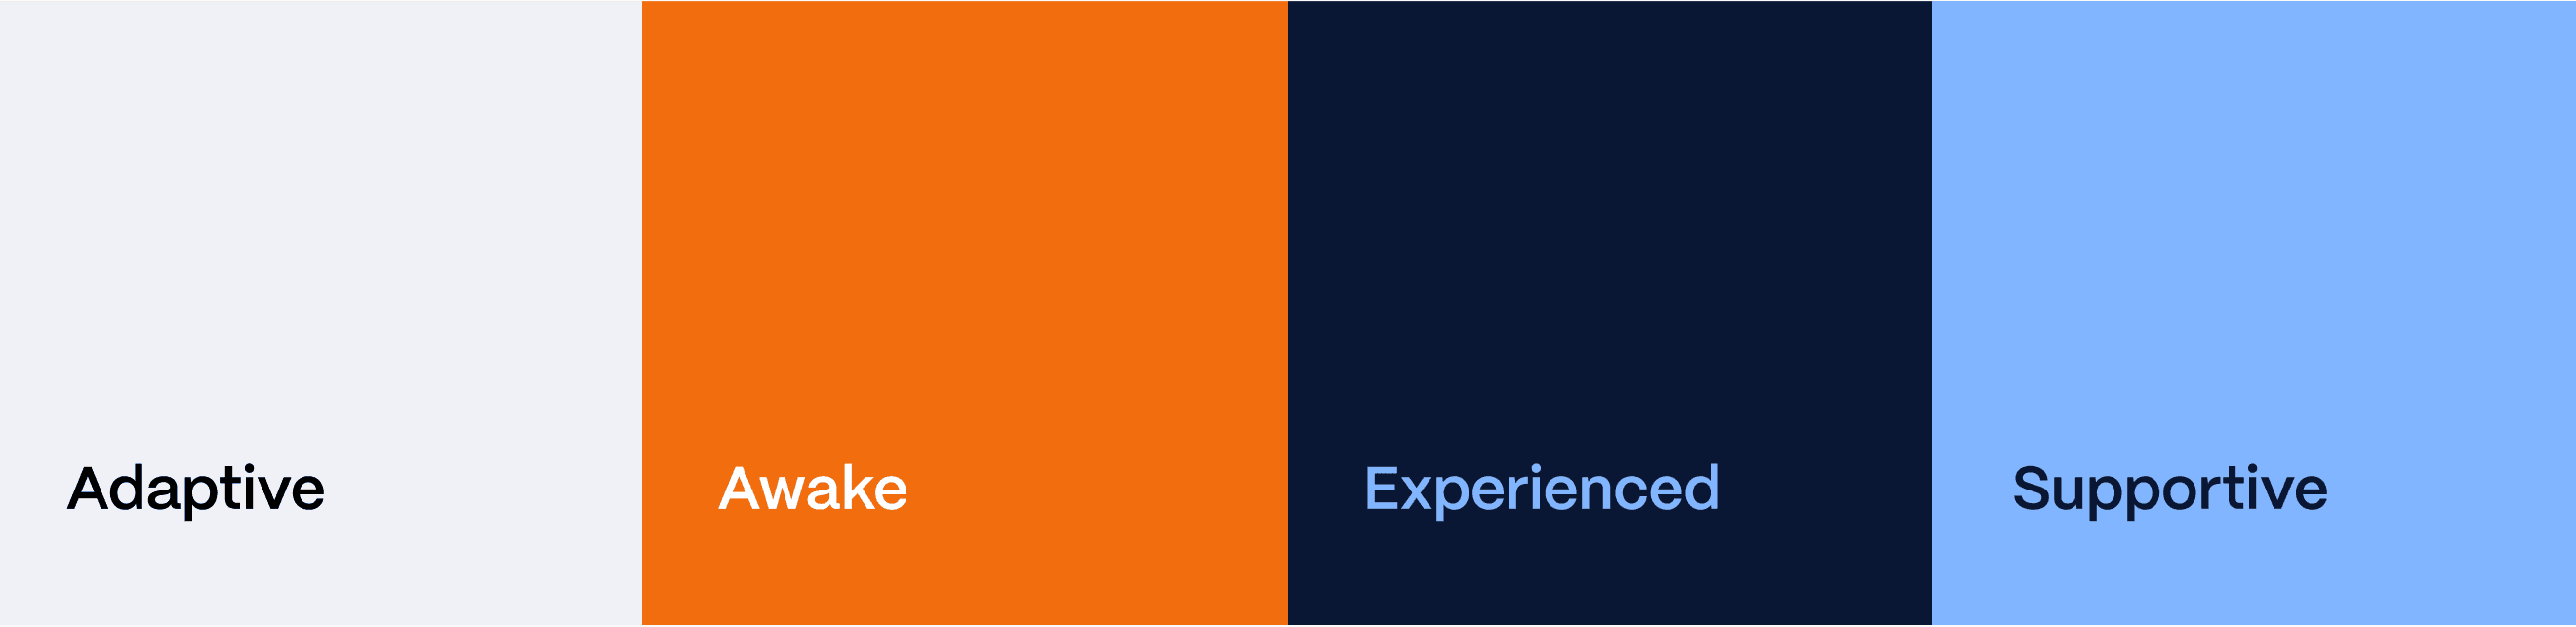 tyntec brand colors: adaptive white, awake orange, experienced dark blue and supportive light blue